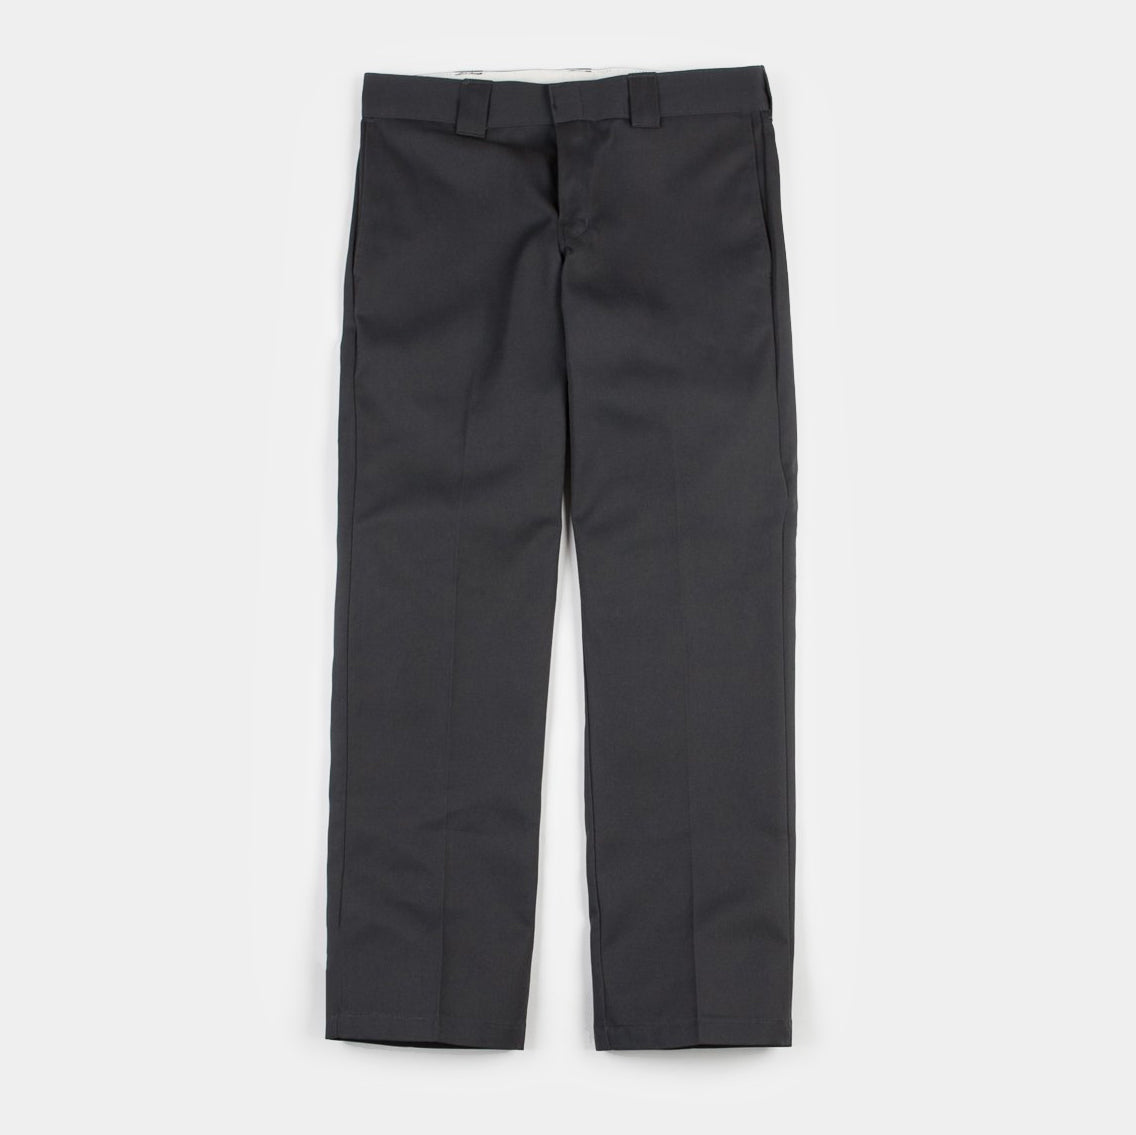 Dickies 874 Charcoal Traditional Work Pants